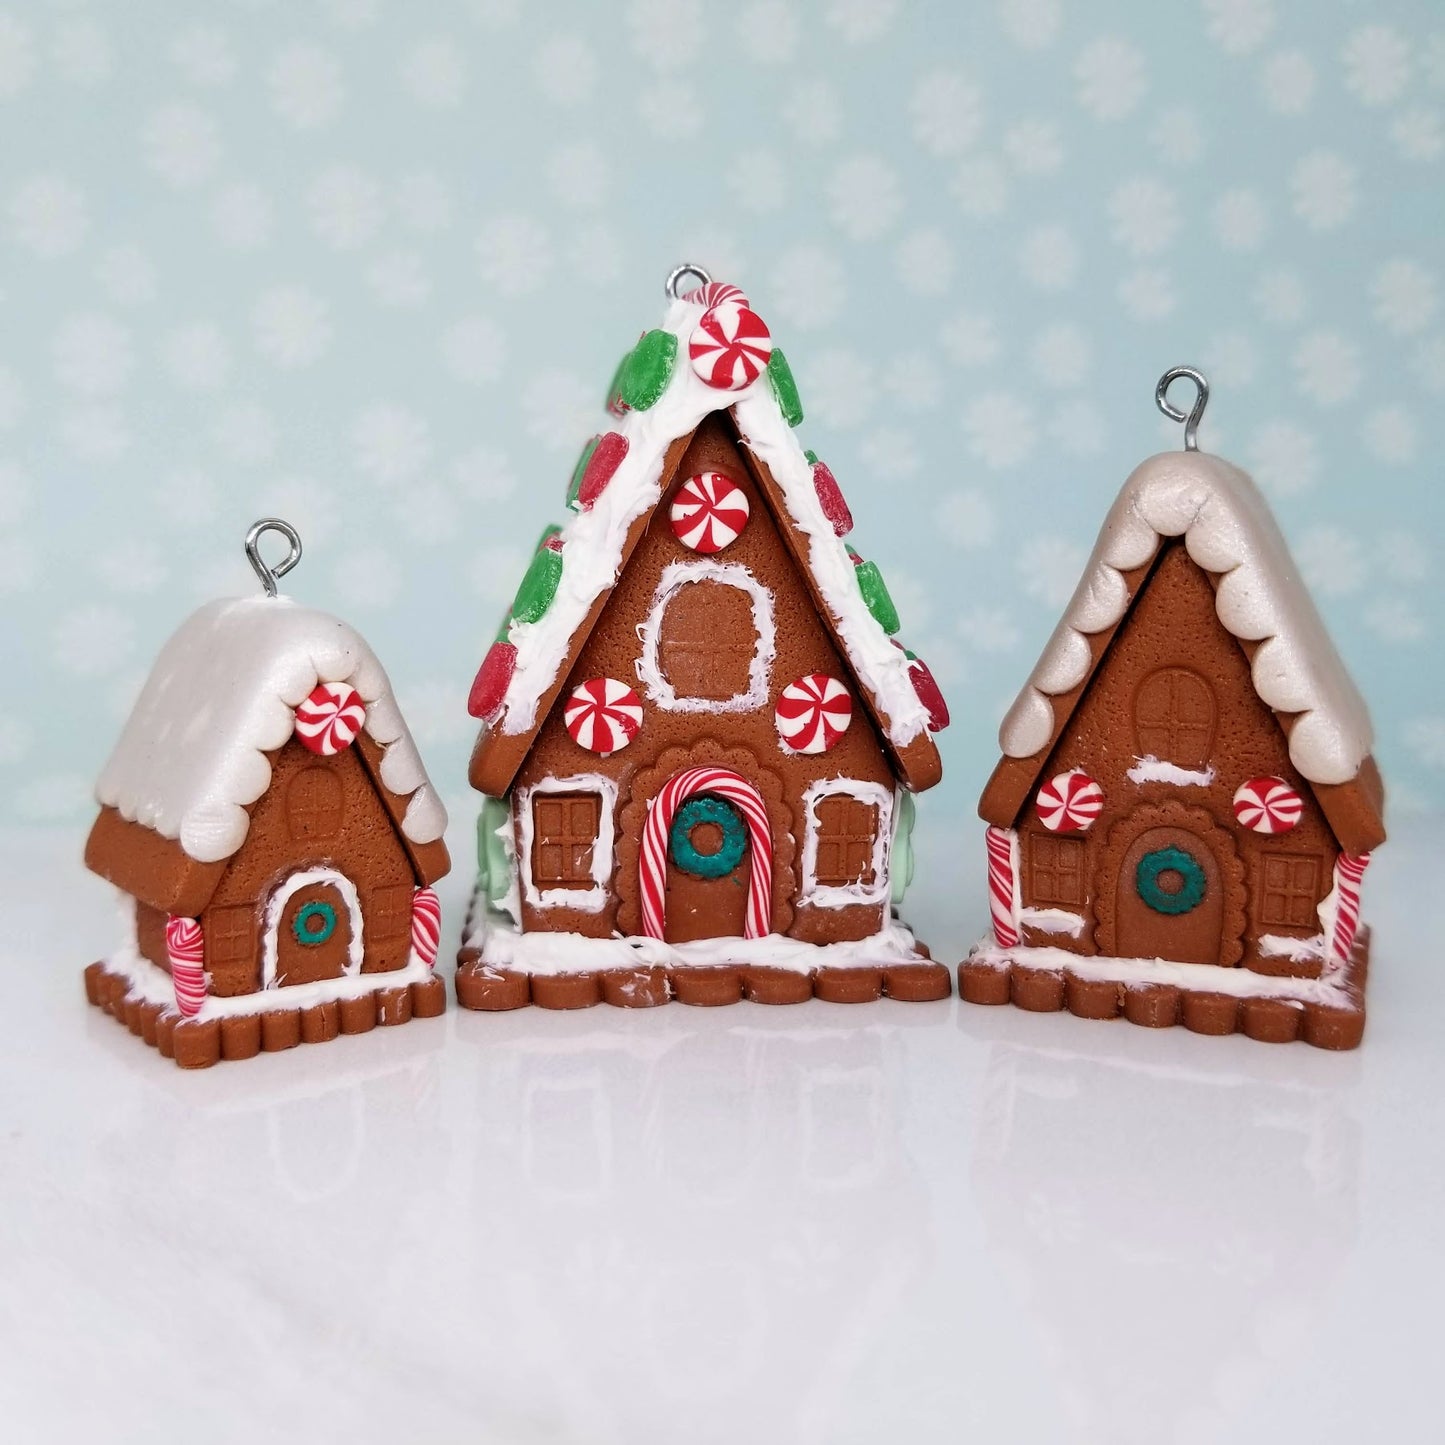 3D Gingerbread House Kit